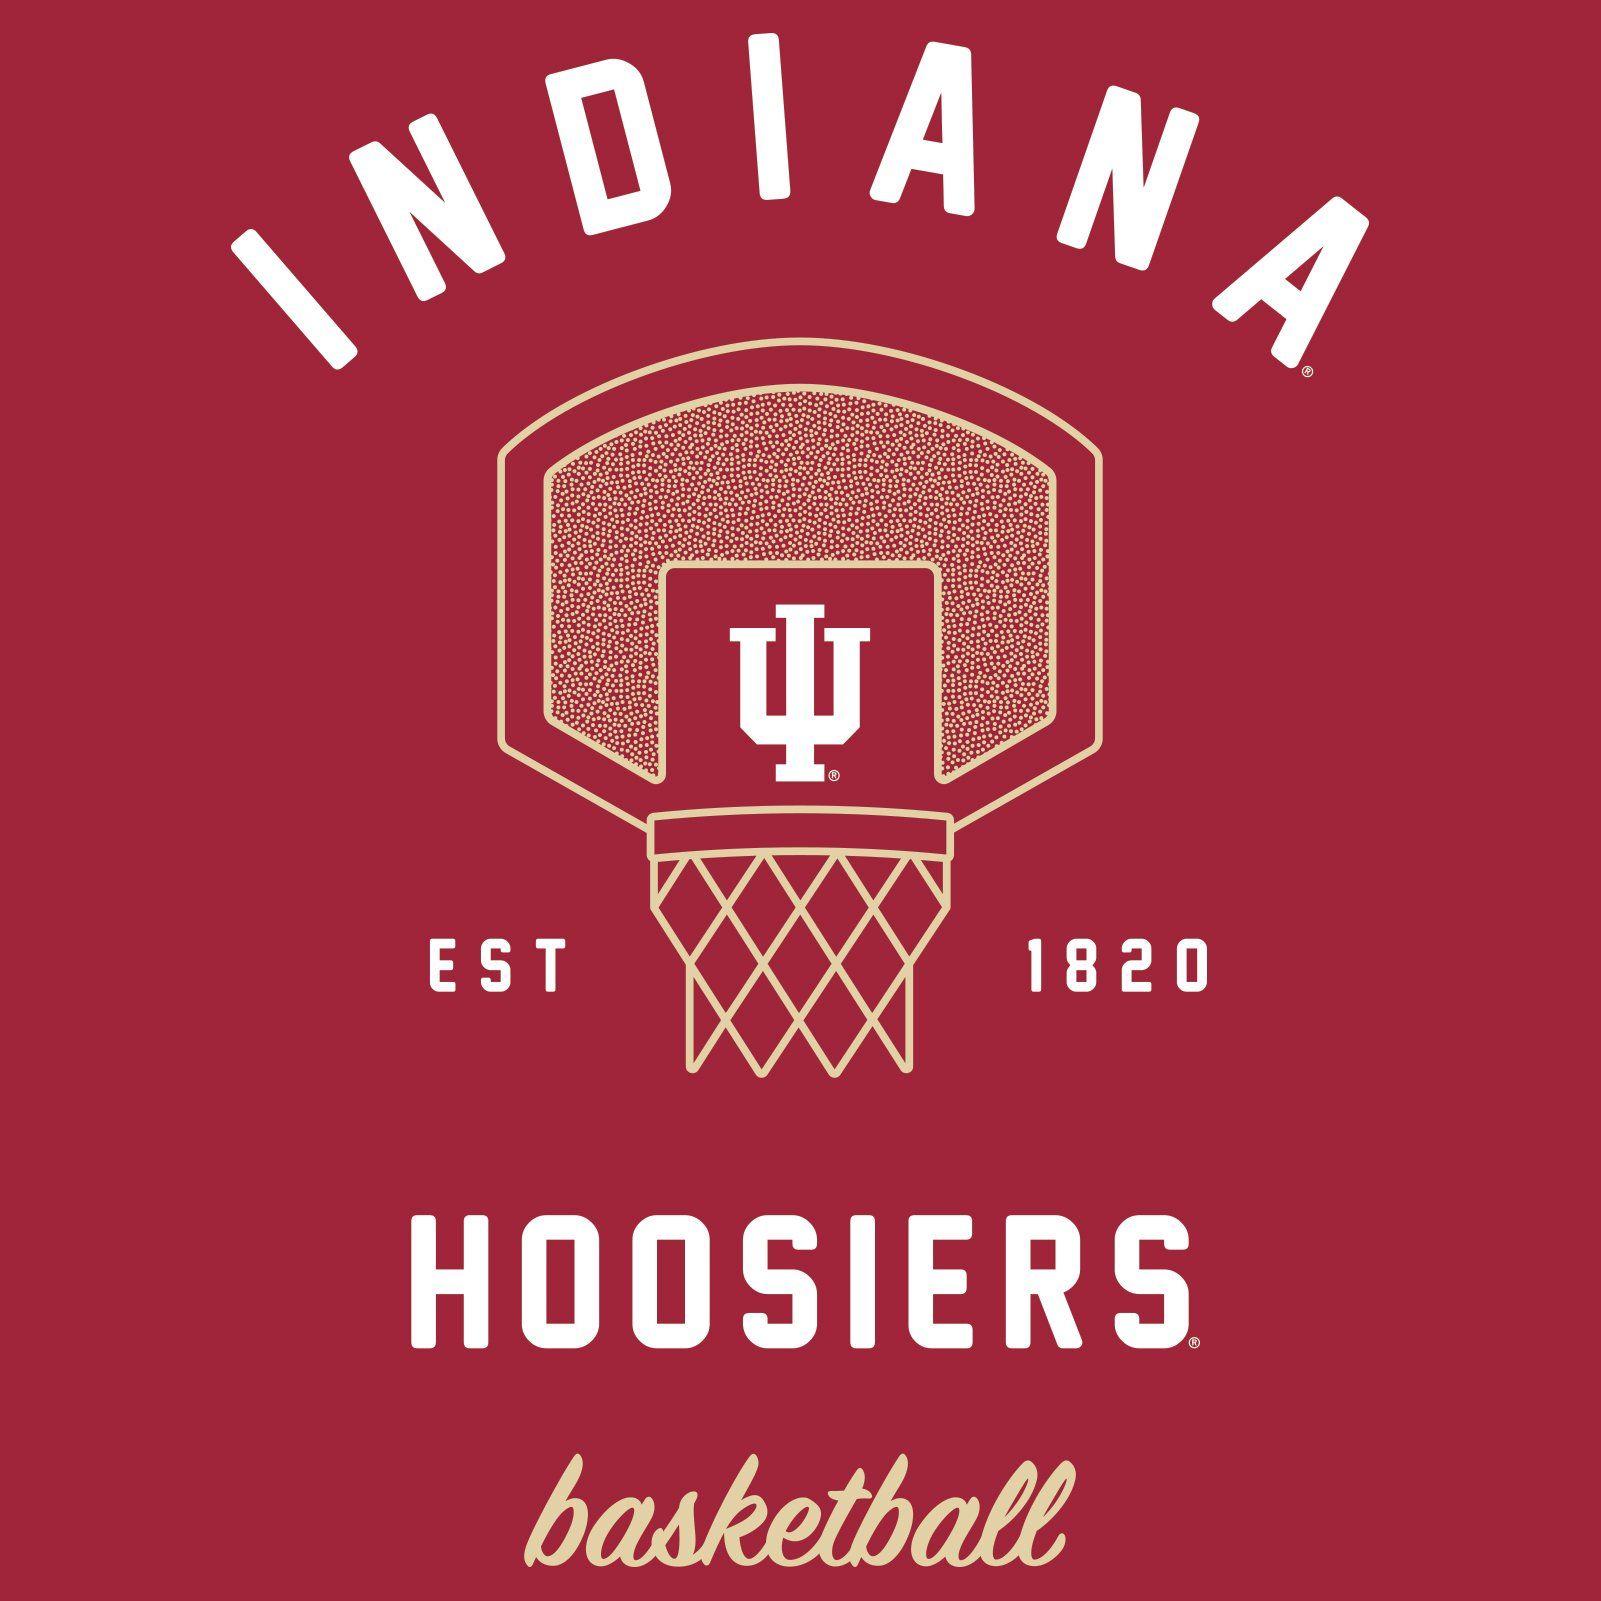 Indiana Hoosiers Basketball Logo - Indiana Hoosiers Basketball Net T Shirt, College, University